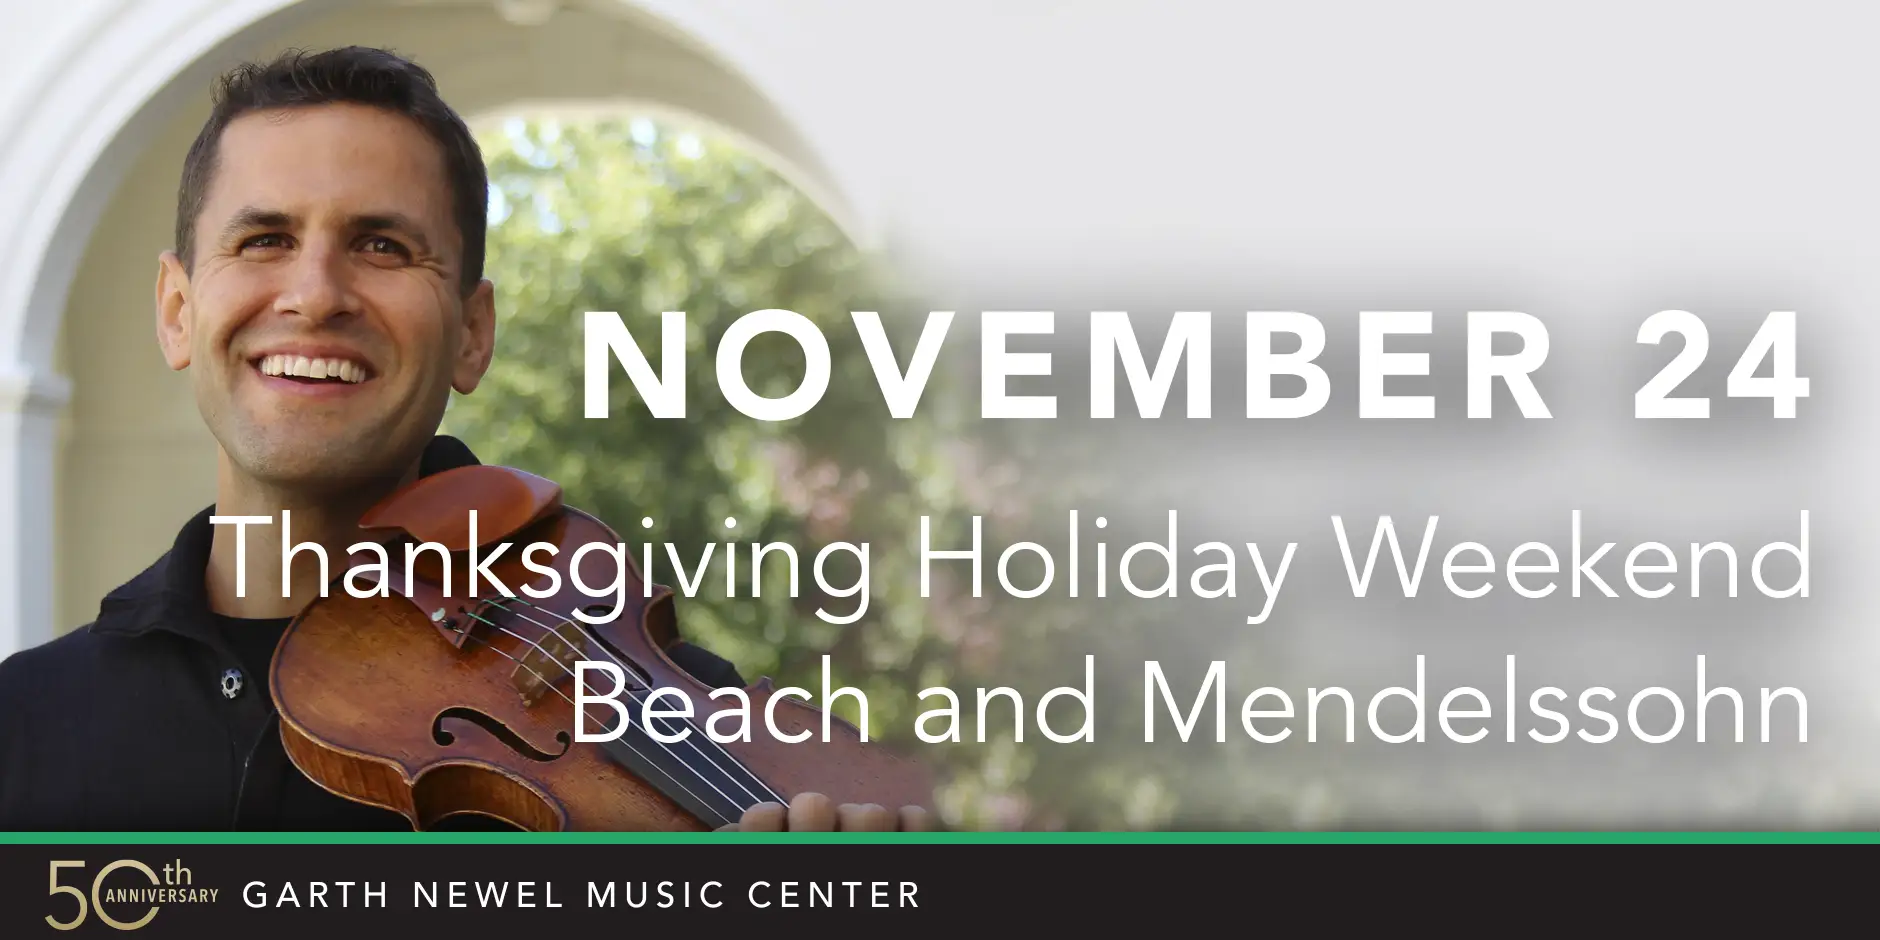 November 24 - Thanksgiving Holiday Weekend: Beach and Mendelssohn